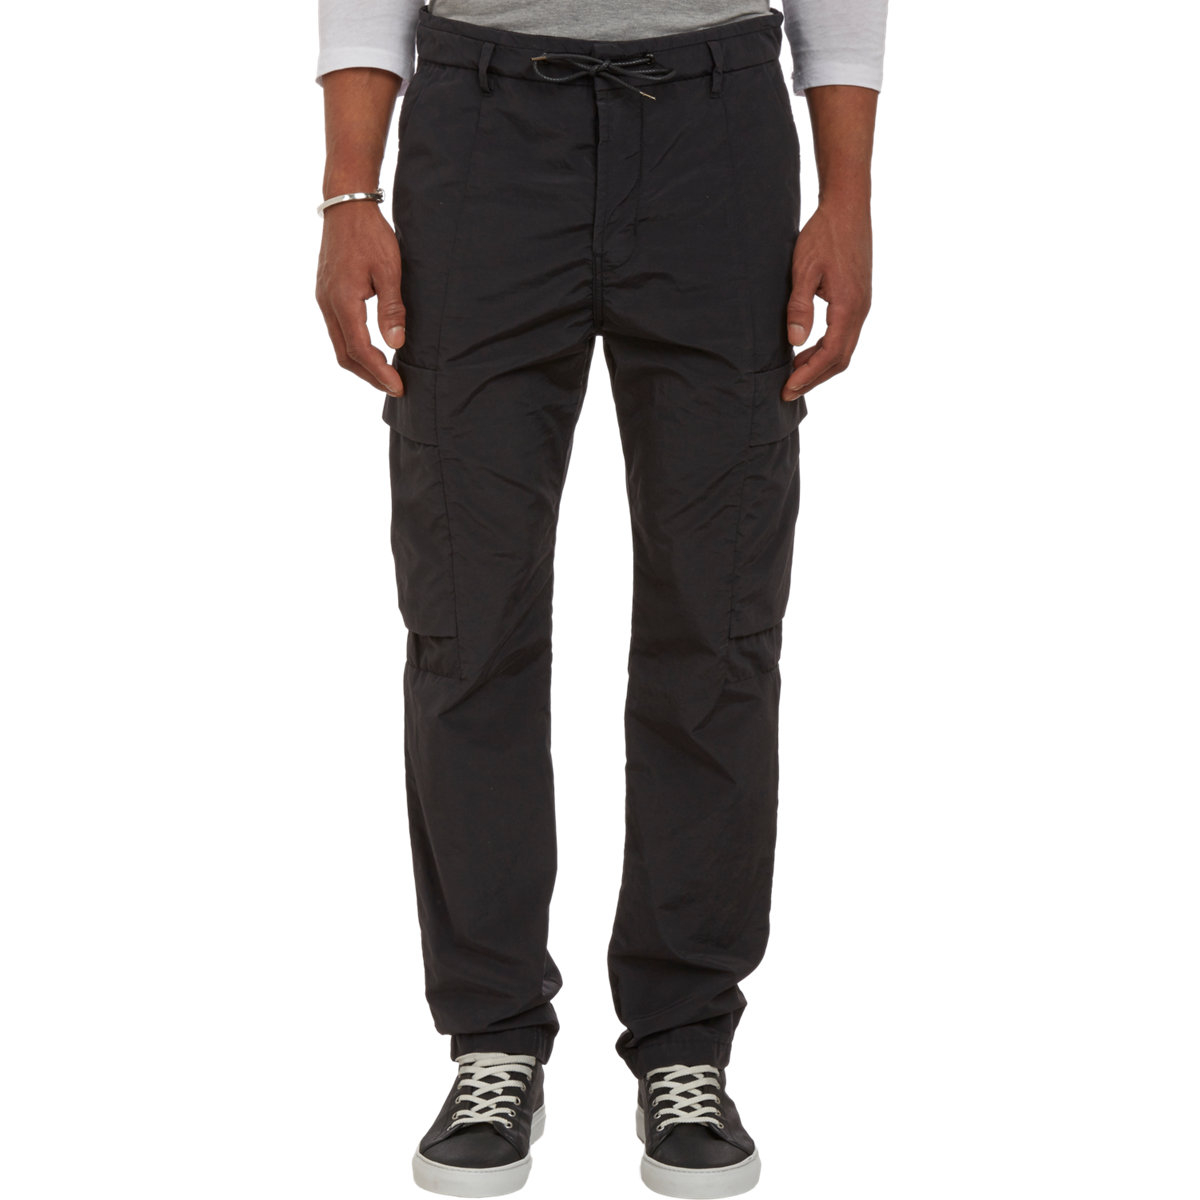 Lyst - J brand Clean Cargo Drawstring Pants in Gray for Men